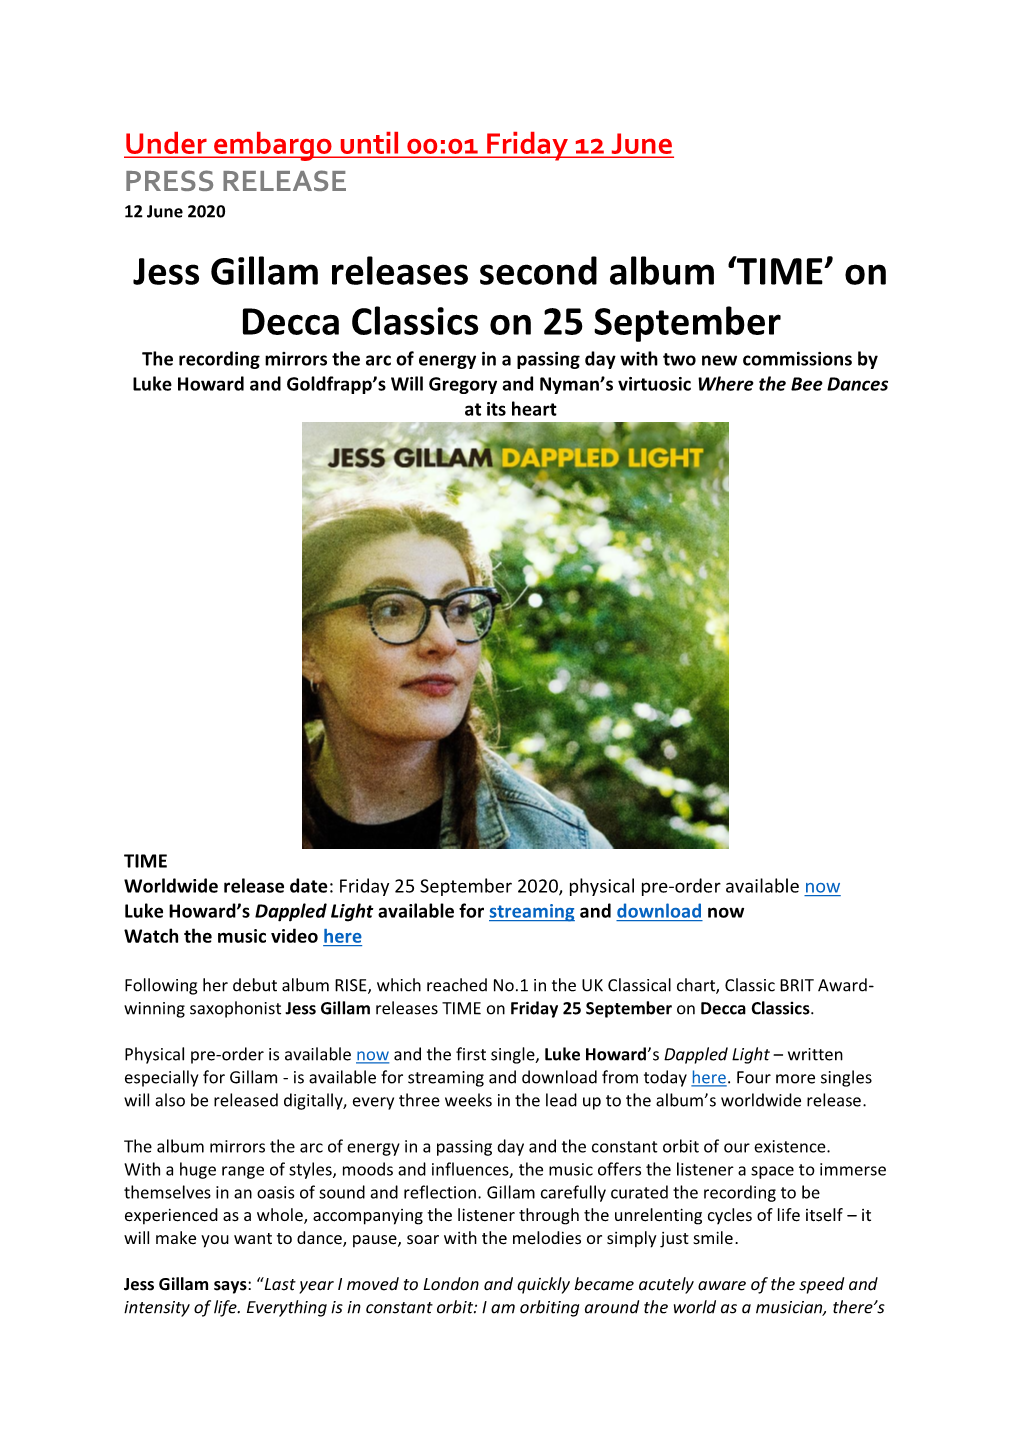 Jess Gillam Releases Second Album 'TIME' on Decca Classics on 25